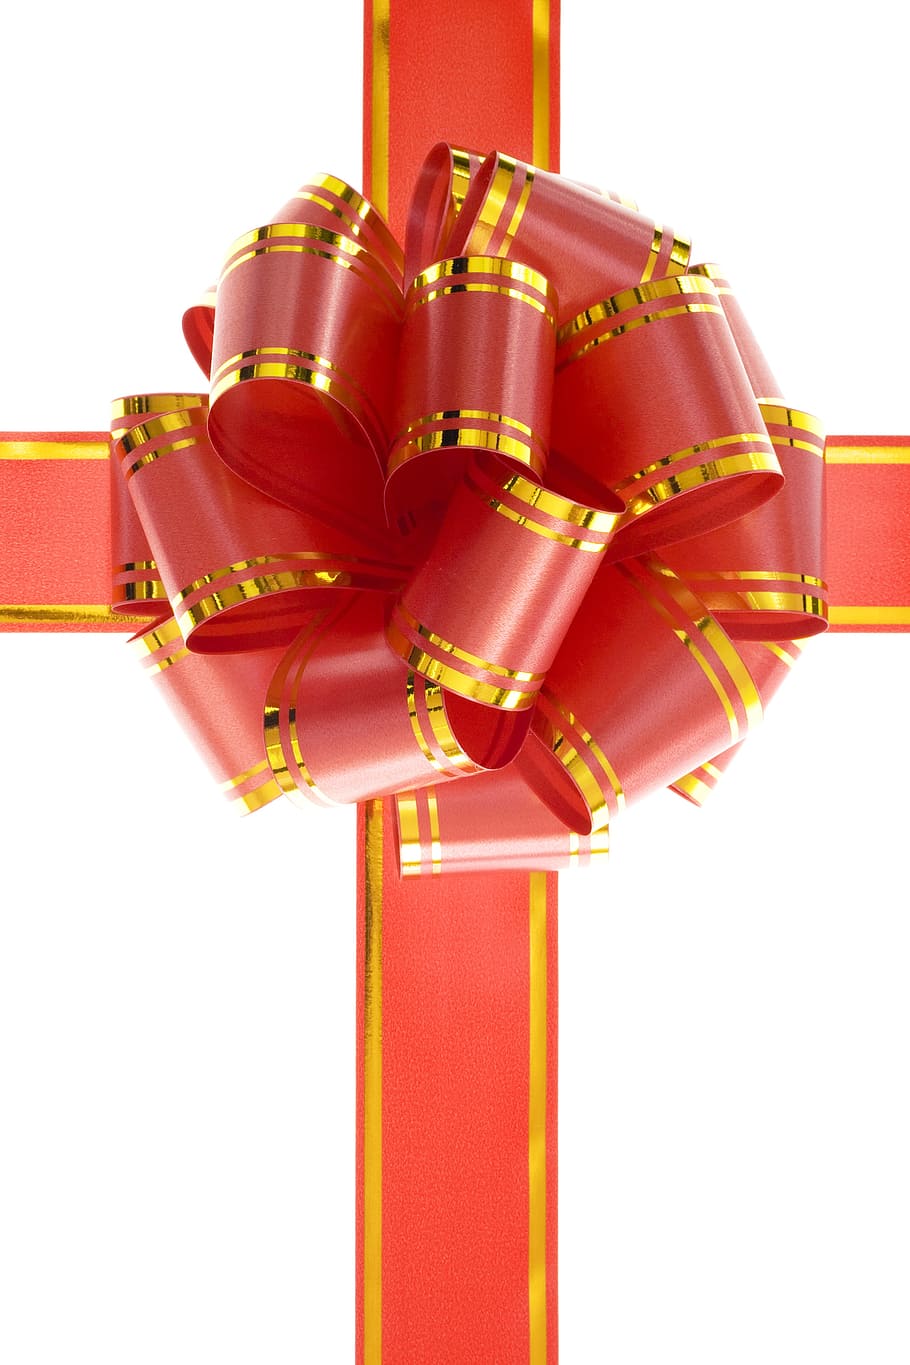 bow, ribbon, red, gift, holiday, white, shine, satin, background